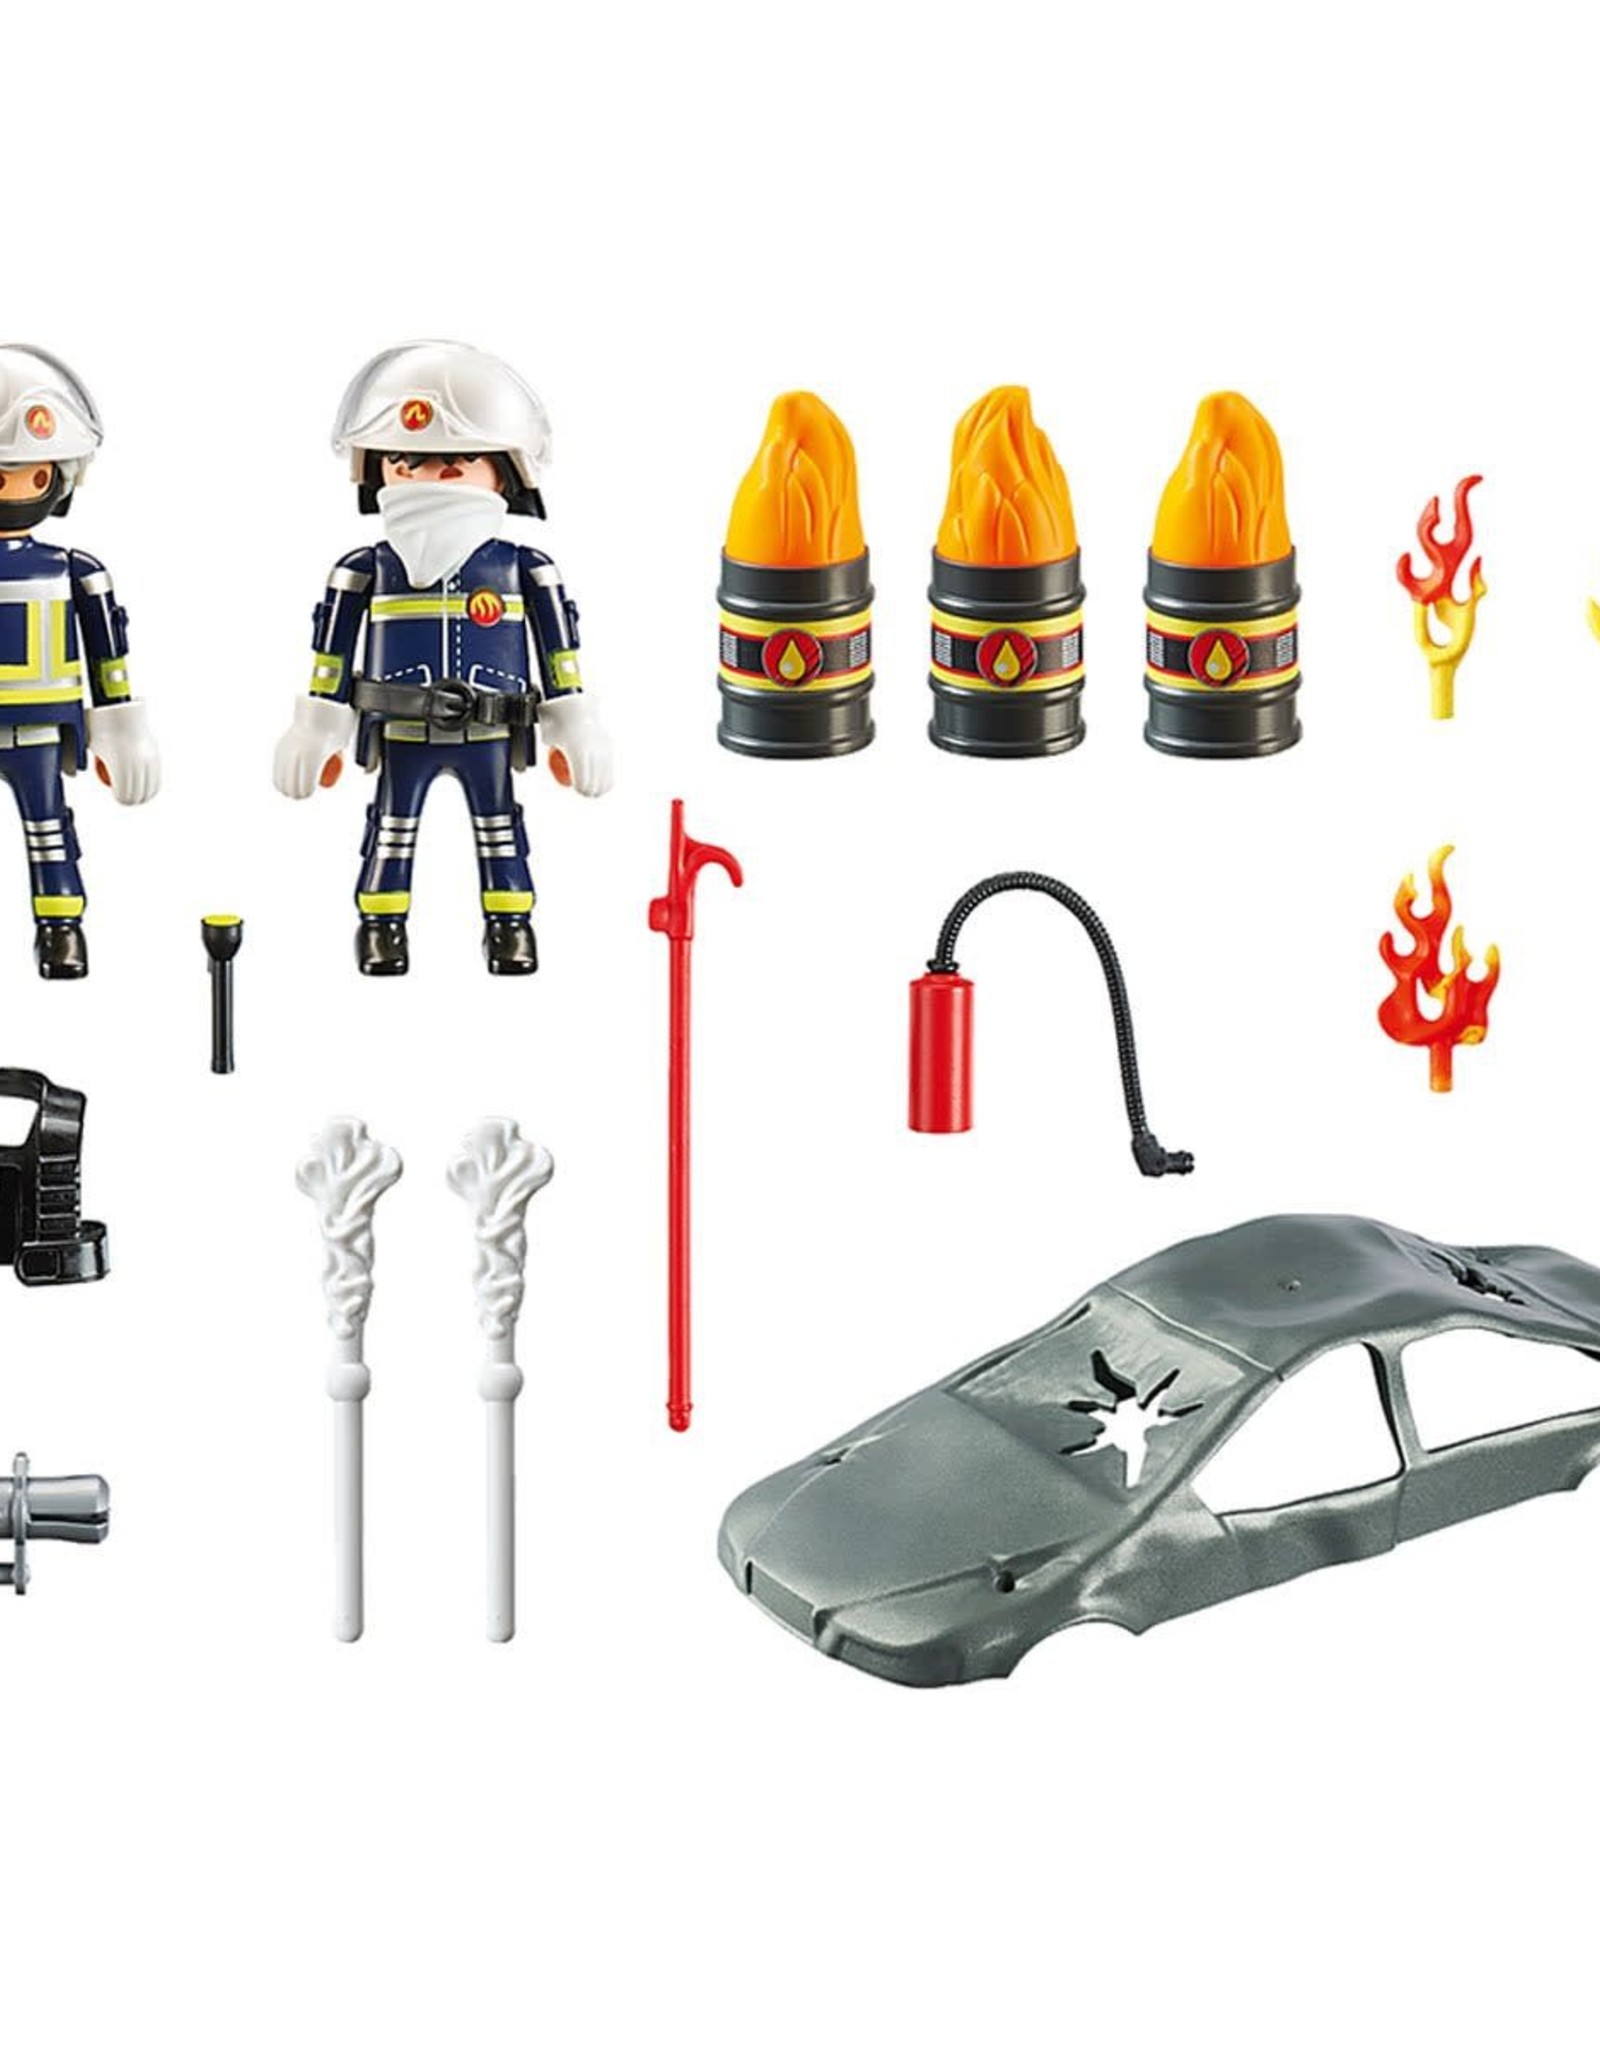 Playmobil Playmobil Starter Pack Fire Drill